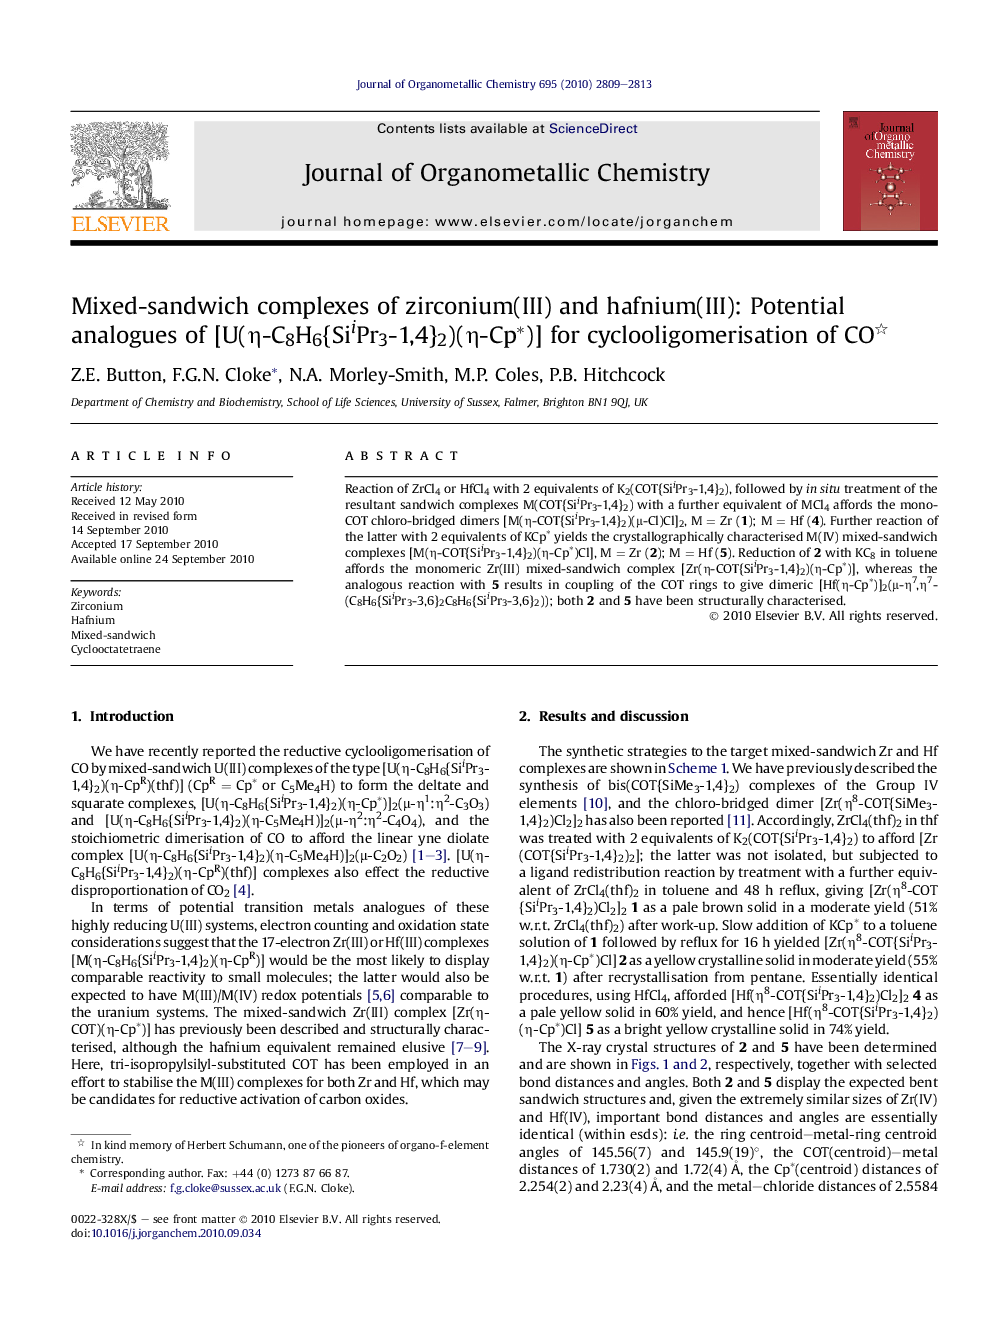 Mixed-sandwich complexes of zirconium(III) and hafnium(III): Potential analogues of [U(η-C8H6{SiiPr3-1,4}2)(η-Cp∗)] for cyclooligomerisation of CO 